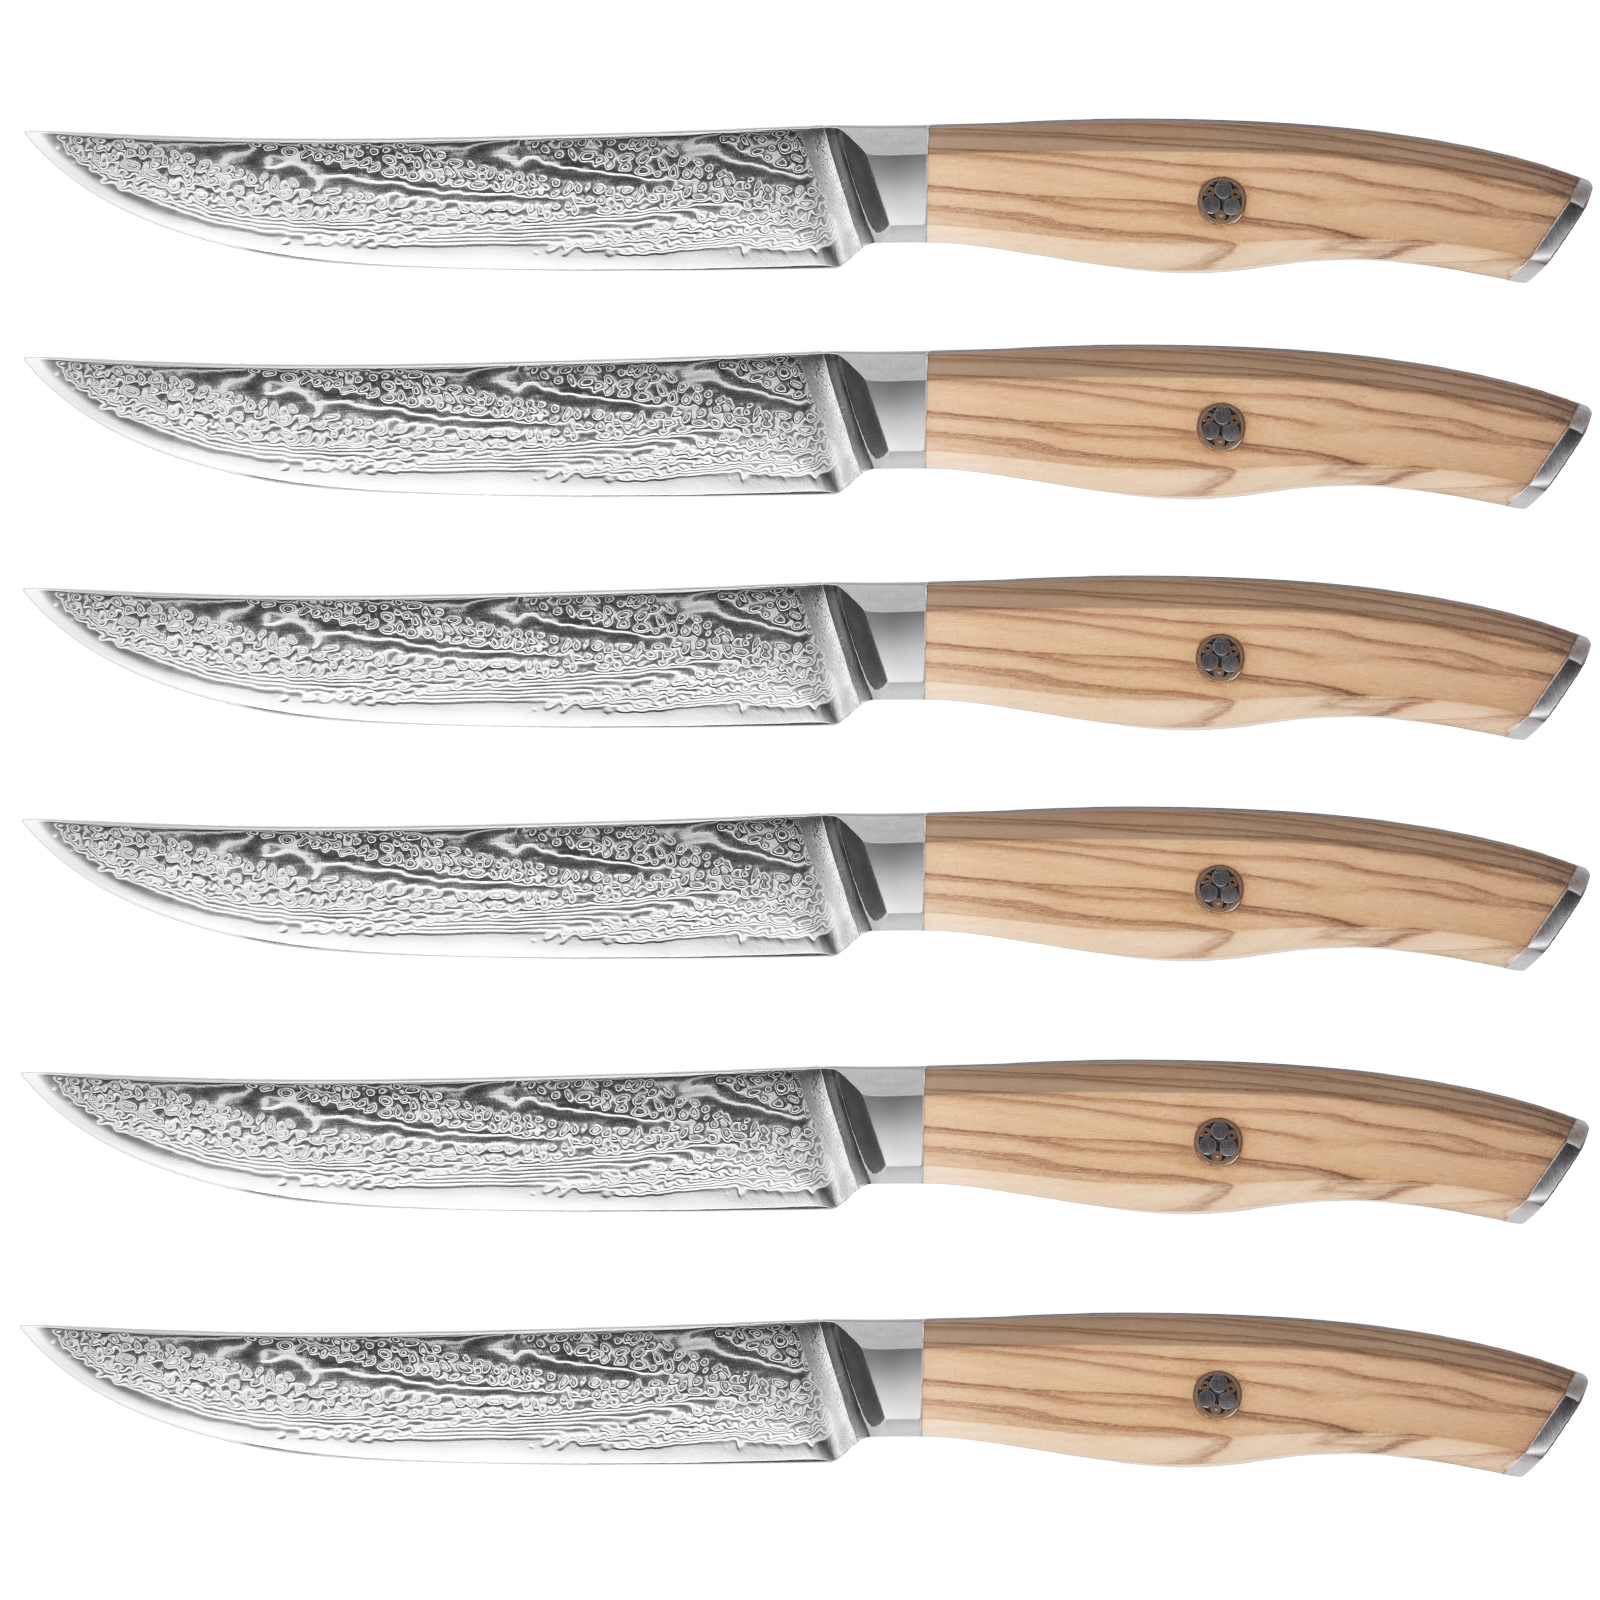 https://img-va.myshopline.com/image/store/2000714577/1648111340947/6pcs-olive-wood-handle-steak-knife-set.jpeg?w=1600&h=1600